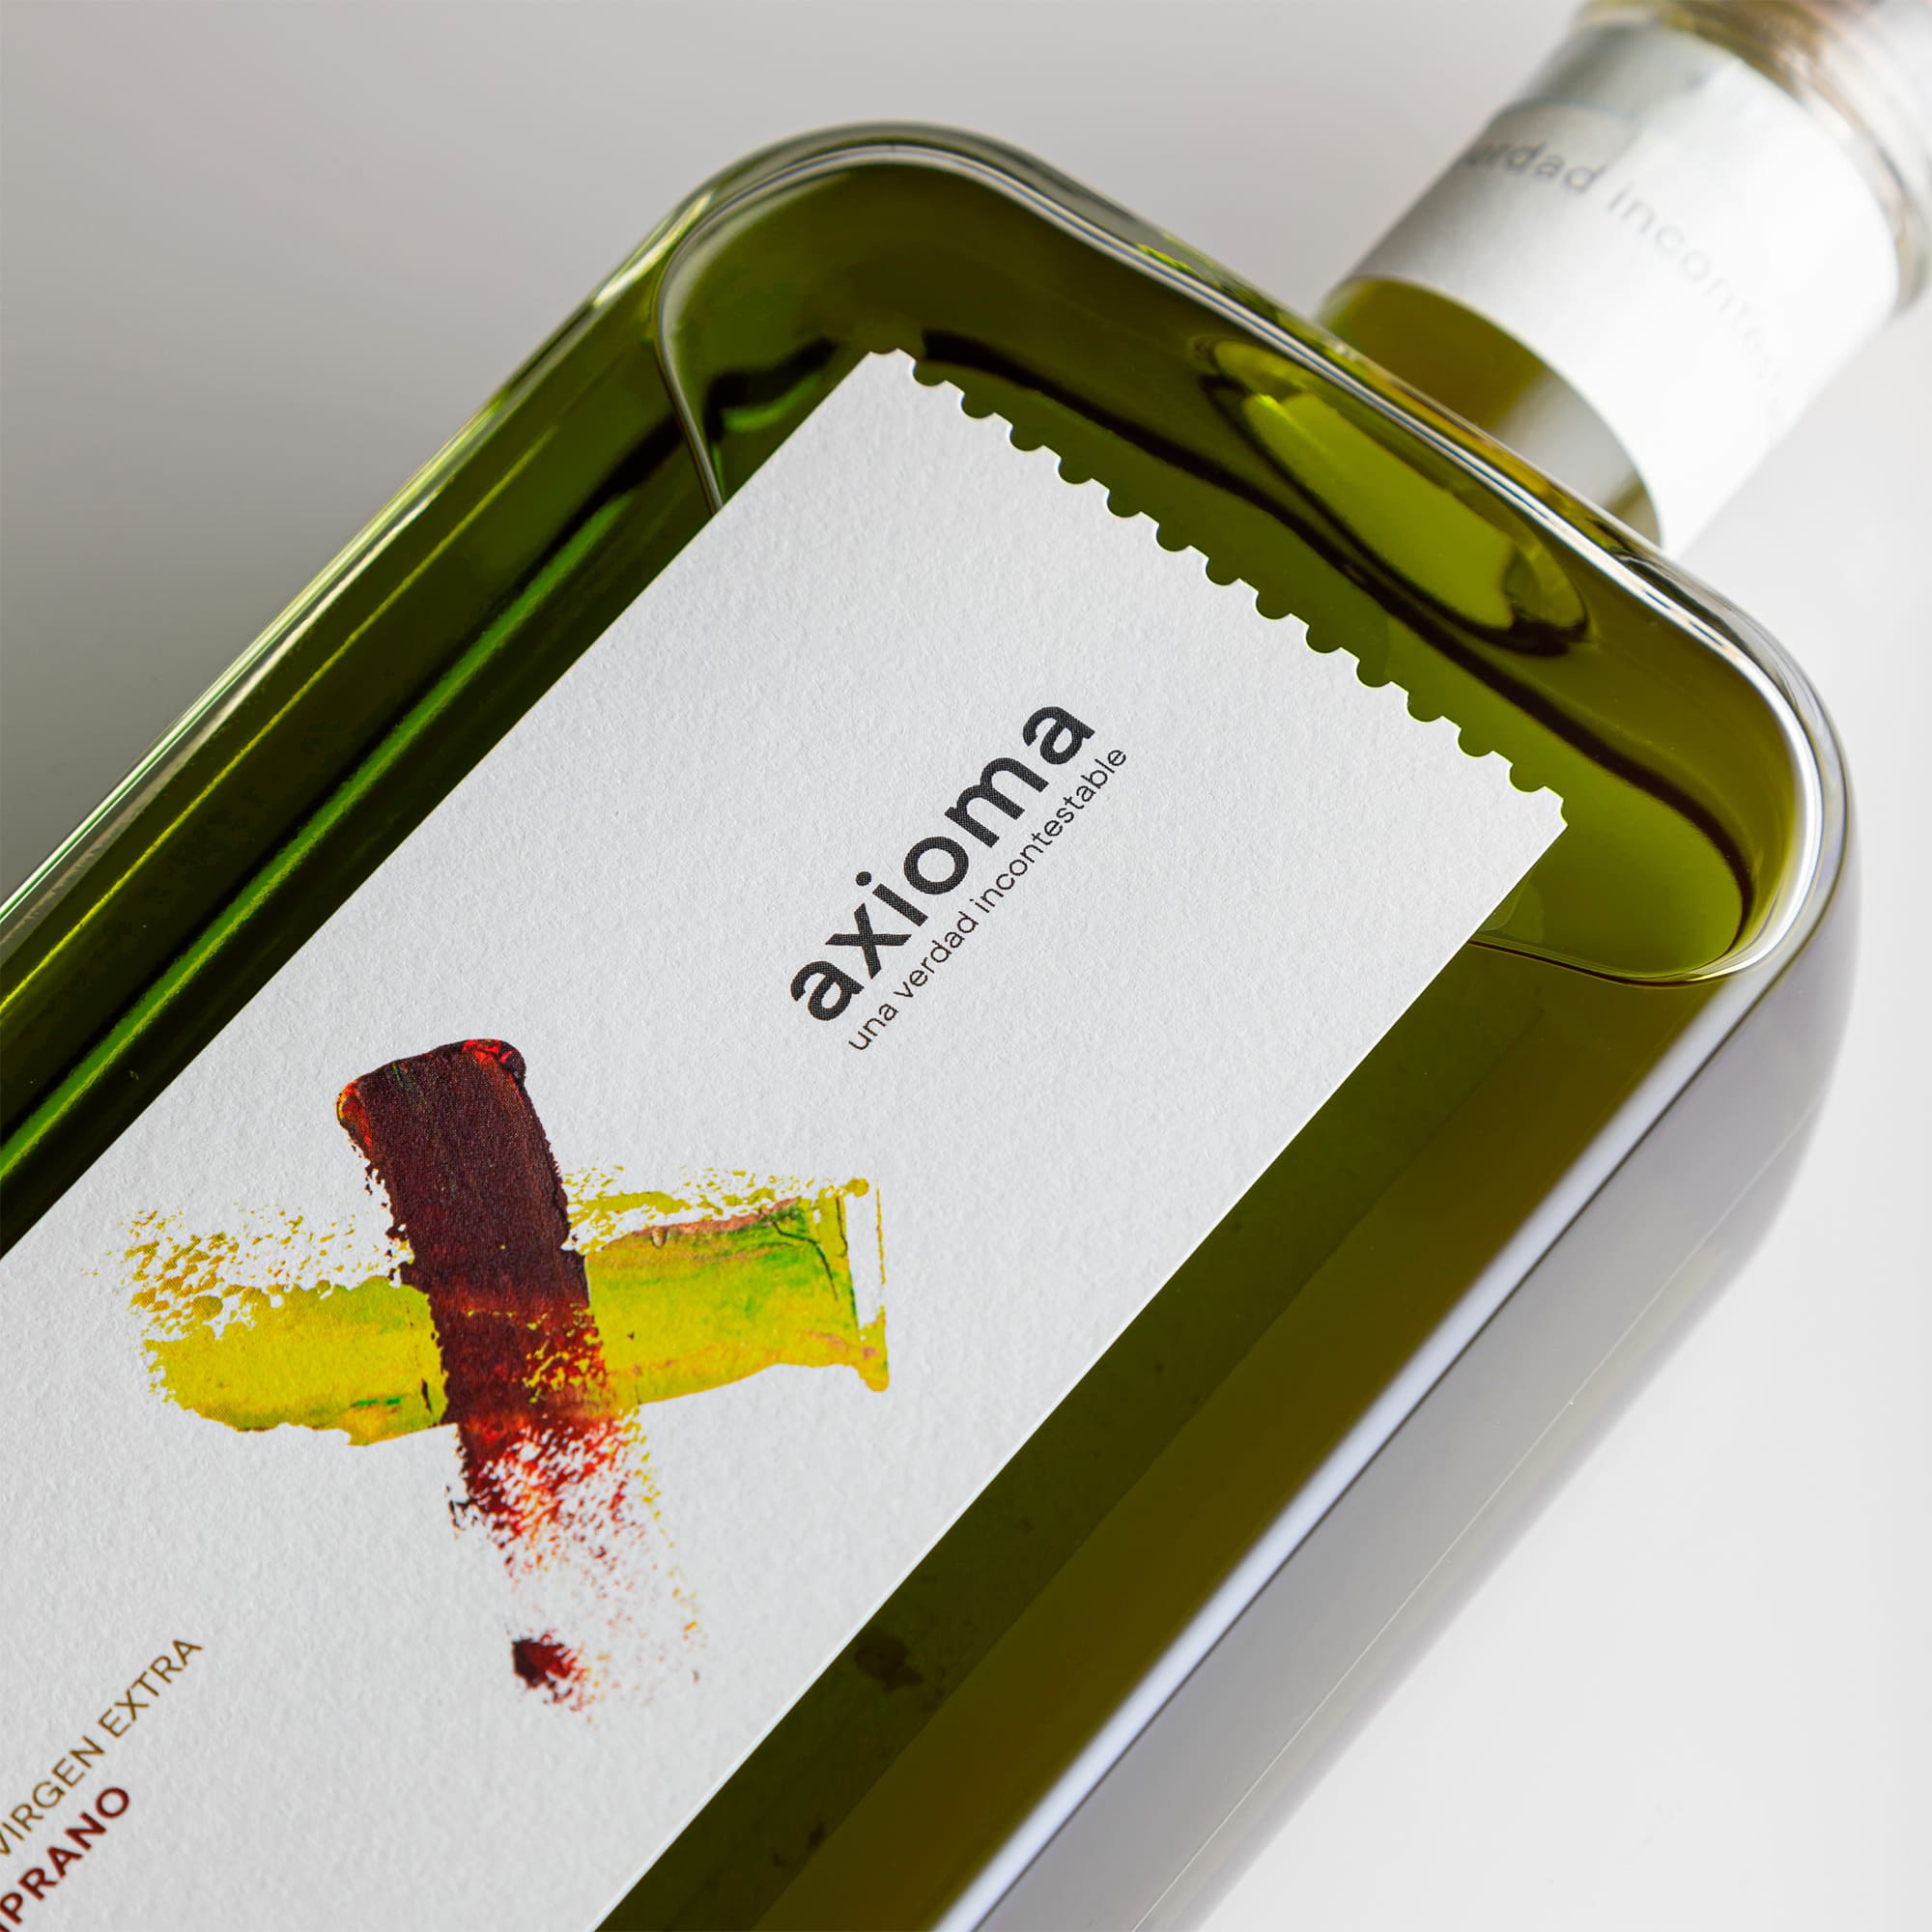 Ideólogo Crafts Premium Design for Axioma Extra Virgin Olive Oil